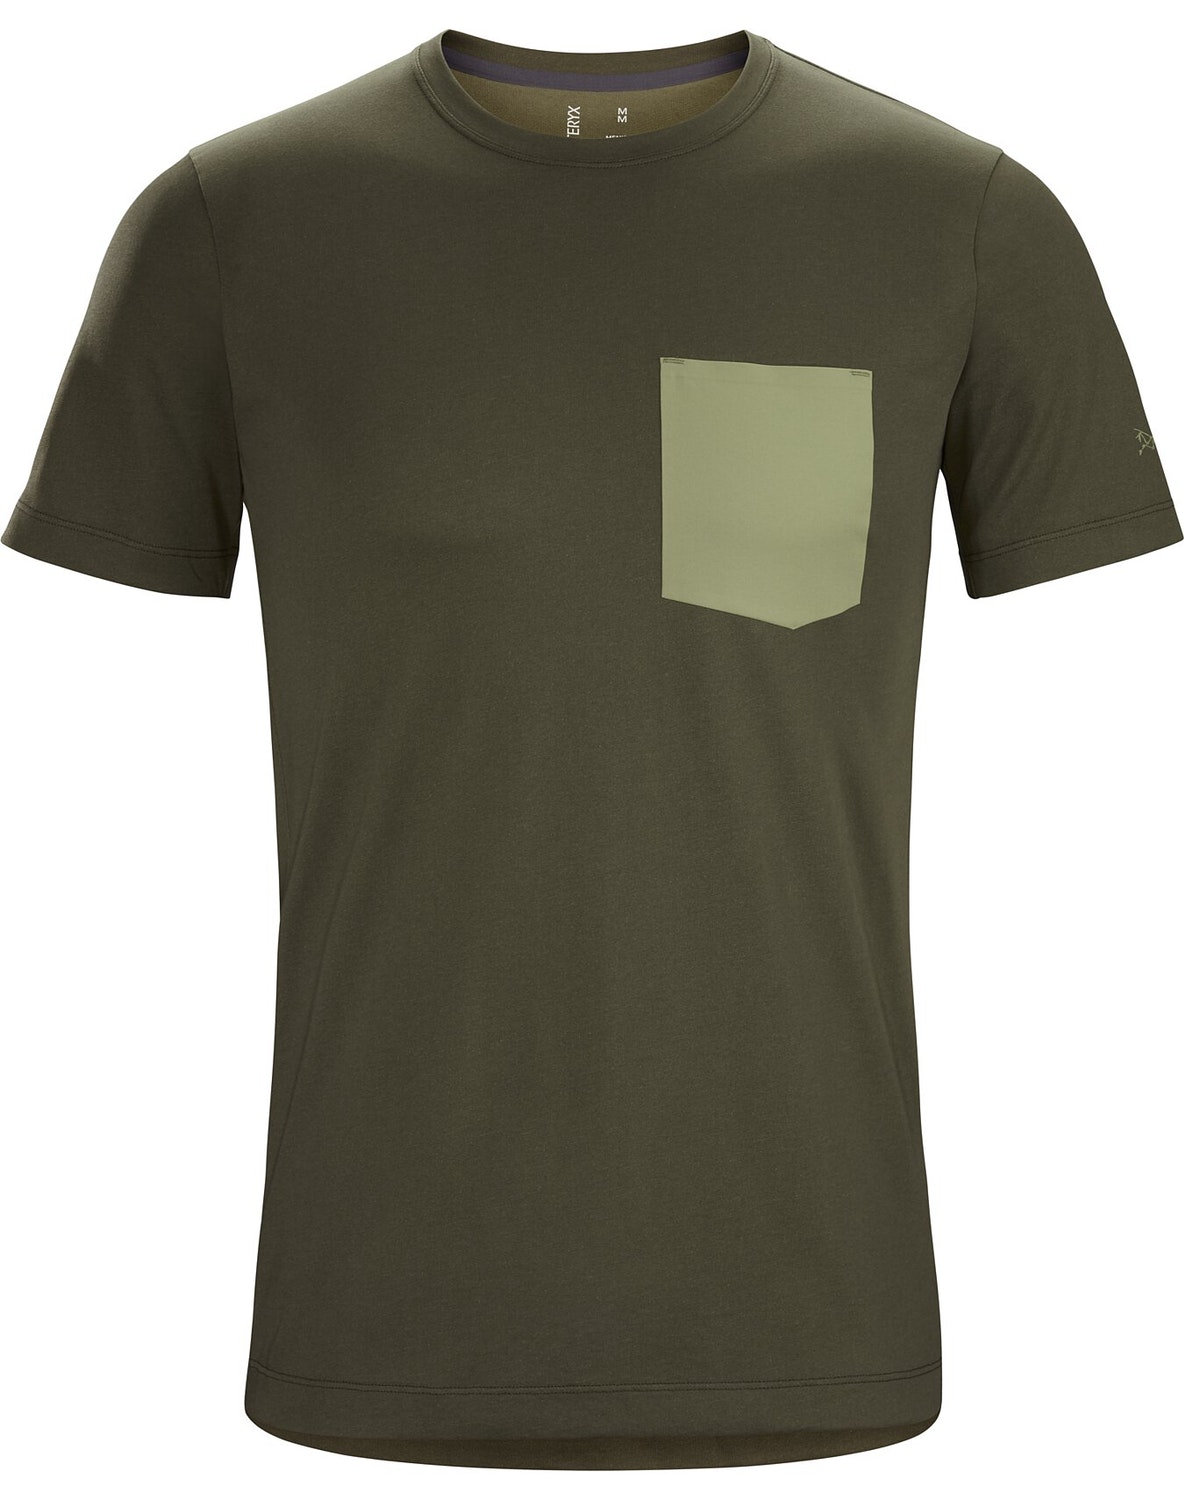 T-shirt Arc'teryx Eris Uomo Cioccolato - IT-513595133